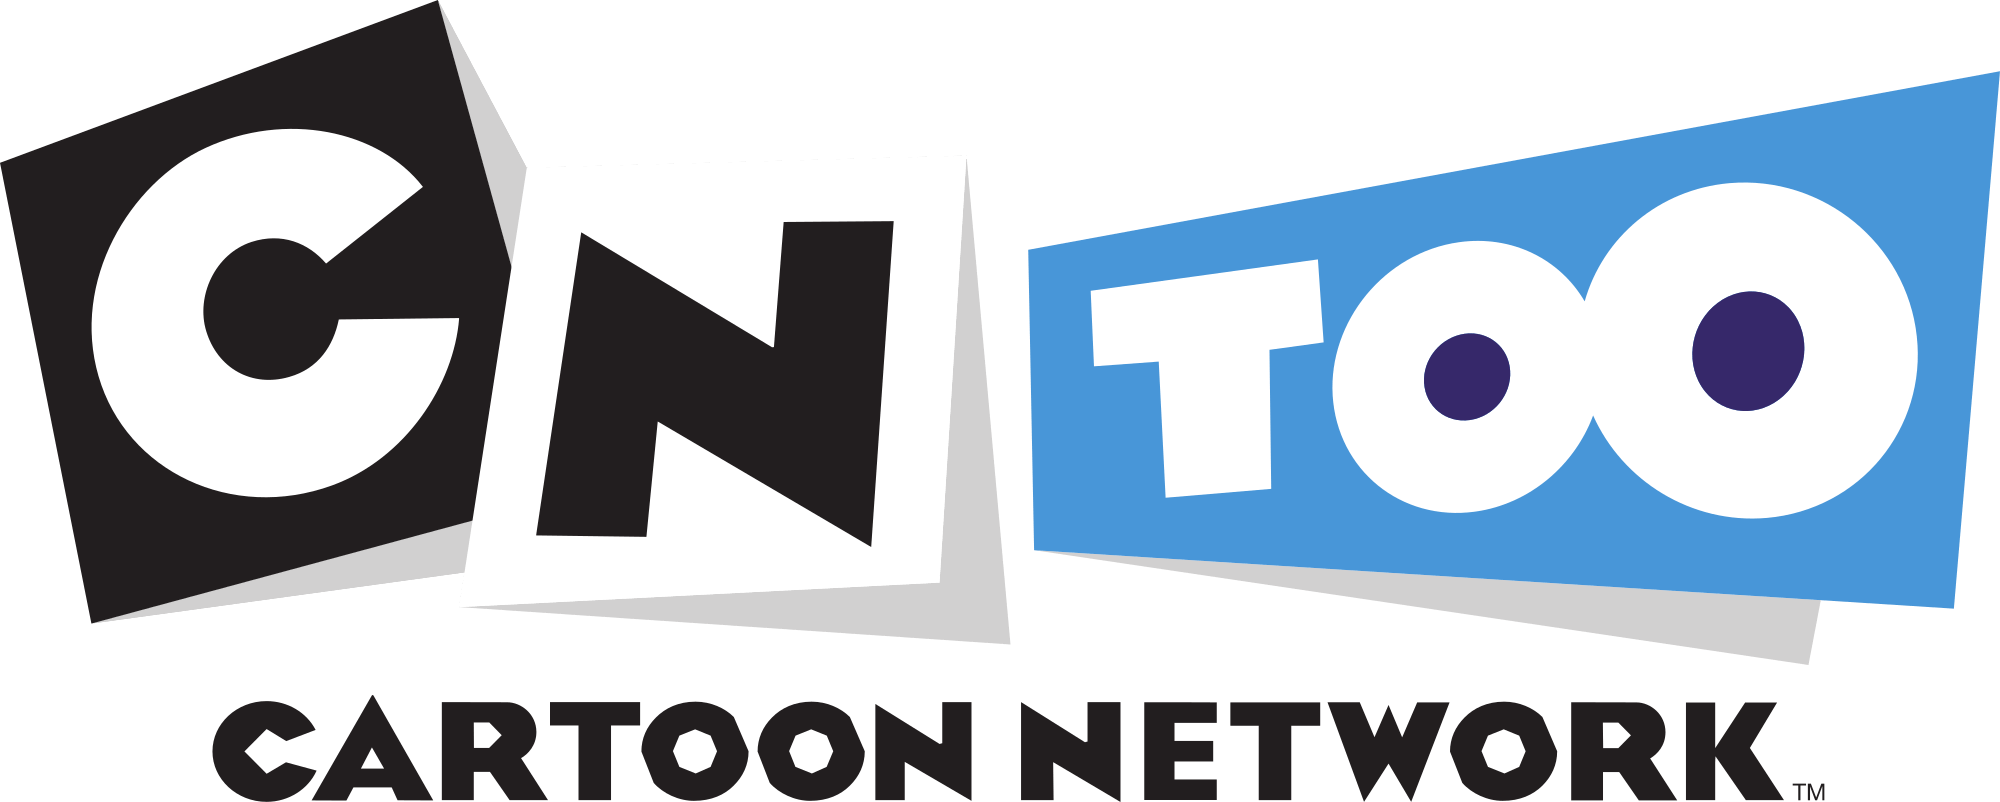 Cartoon Network 2000 Logo - File:Cartoon Network TOO.svg - Wikimedia Commons